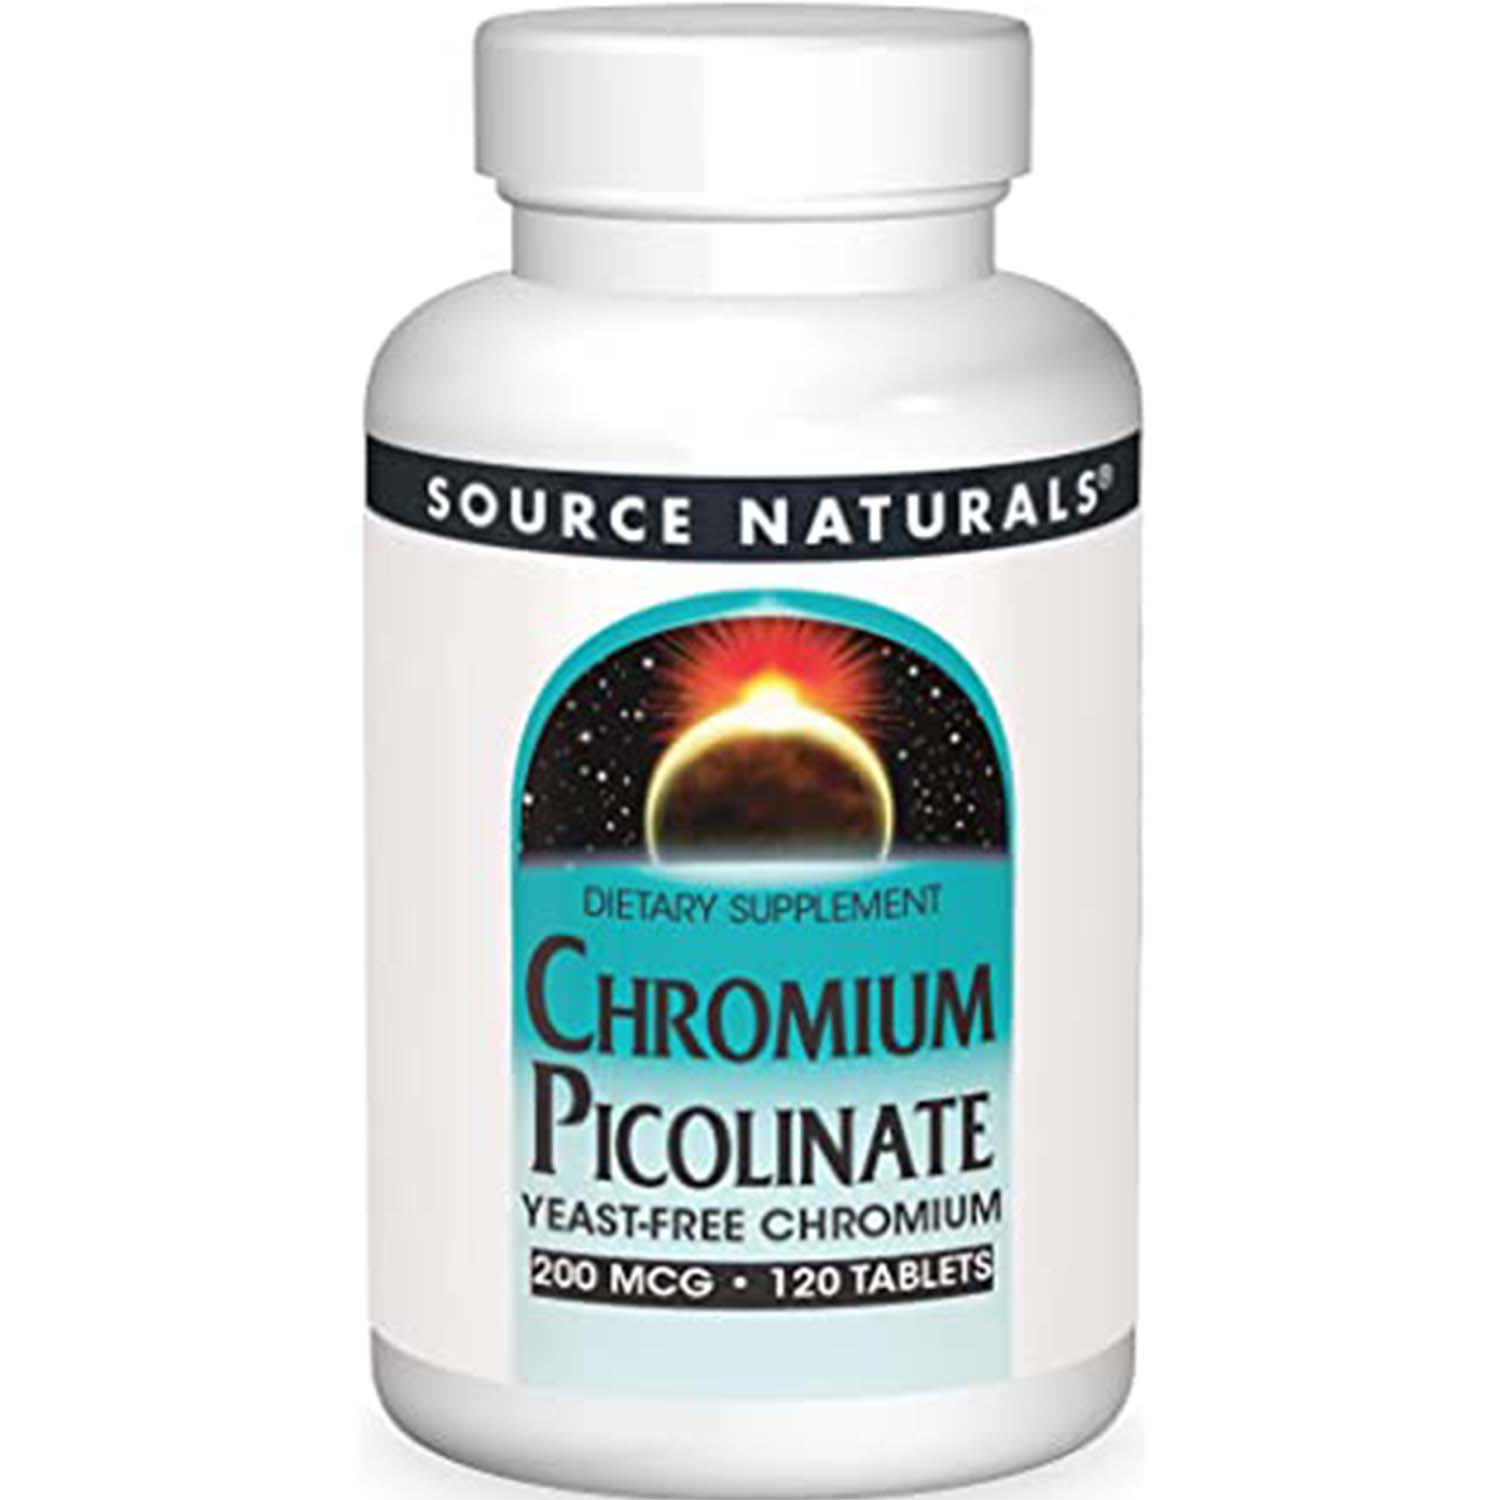 Source Naturals Chromium Picolinate 120 Tablets 200 mcg